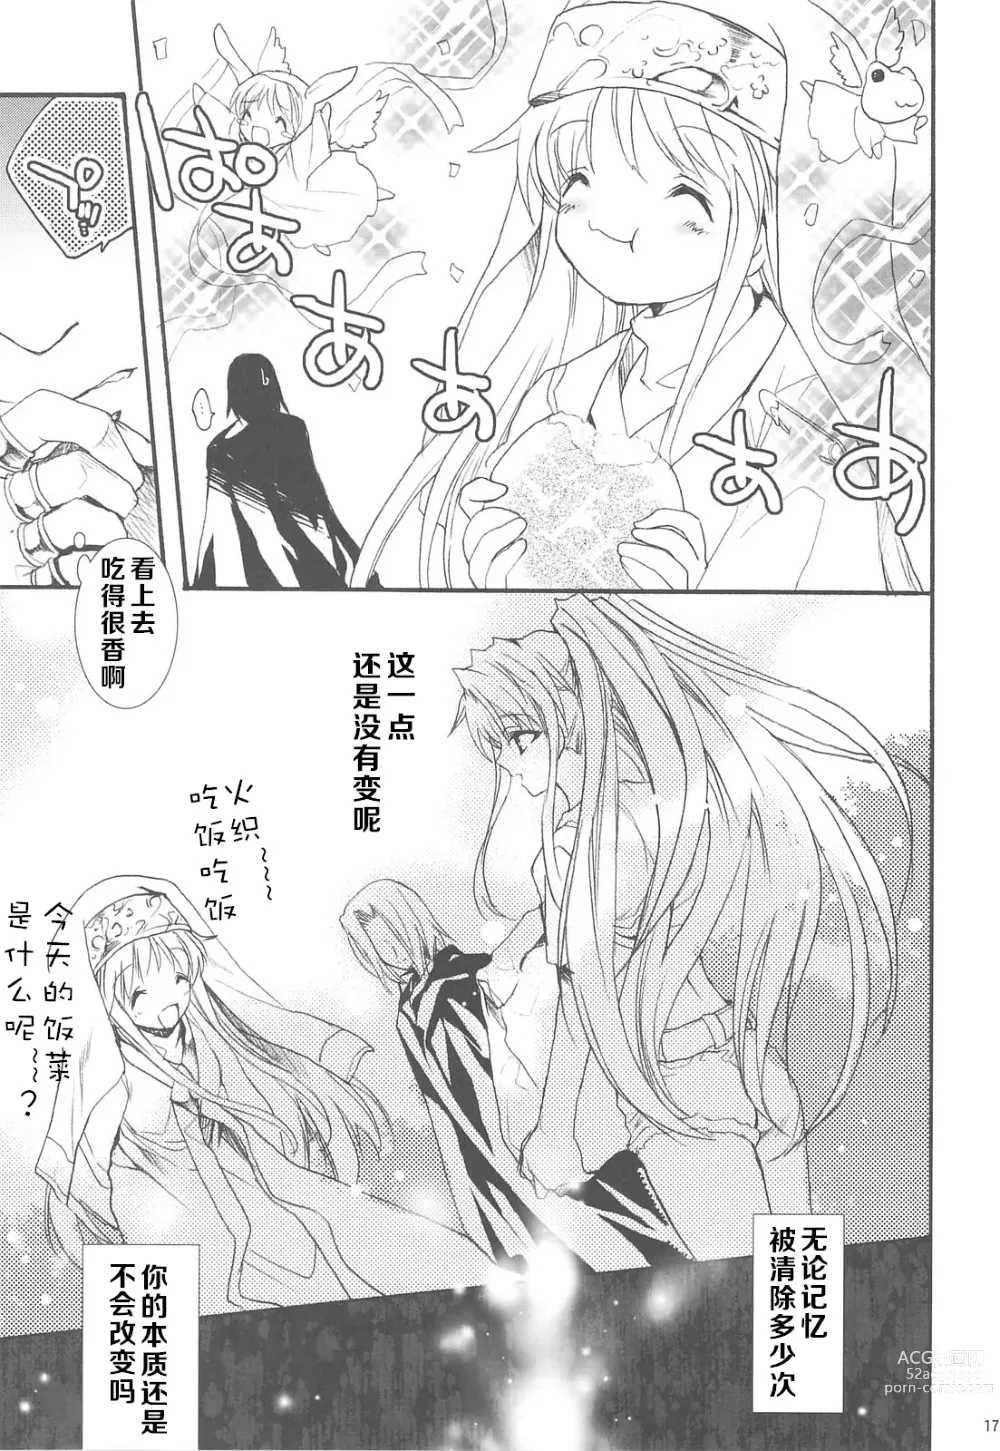 Page 5 of doujinshi 我史提尔得不到茵蒂克丝，就强暴她